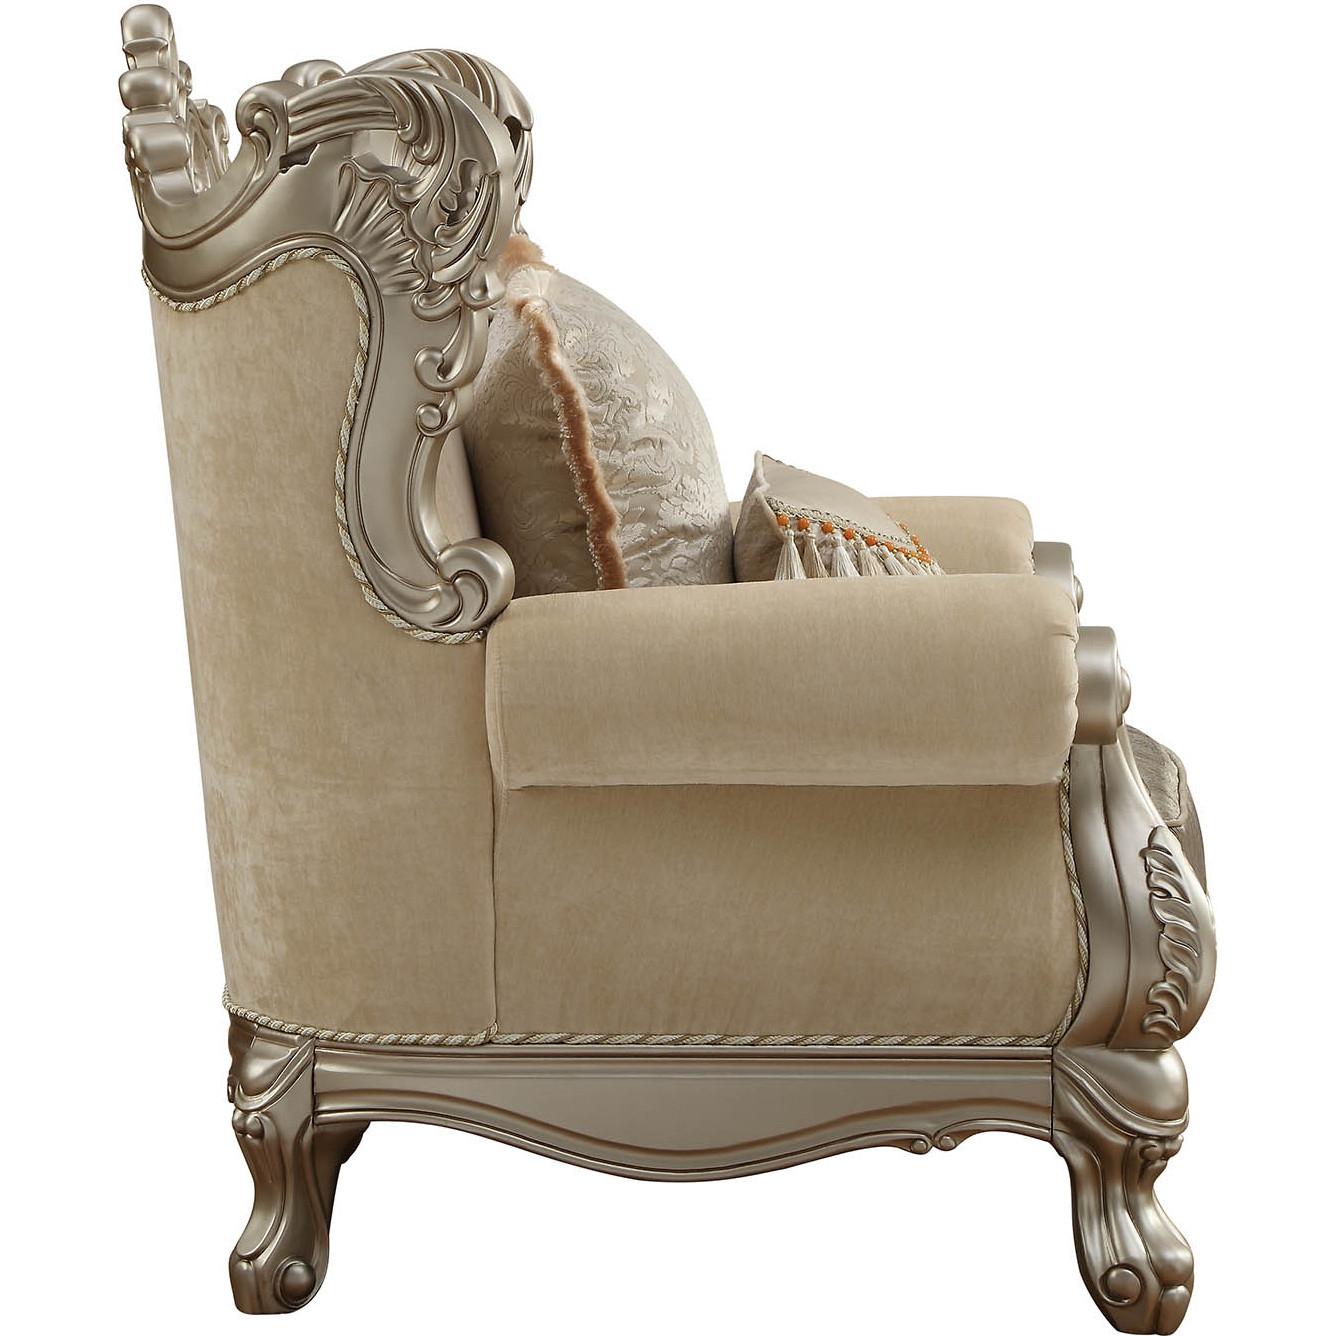 

    
Acme Furniture Ranita 51042 Arm Chair Tan/Champagne 51042-Ranita
